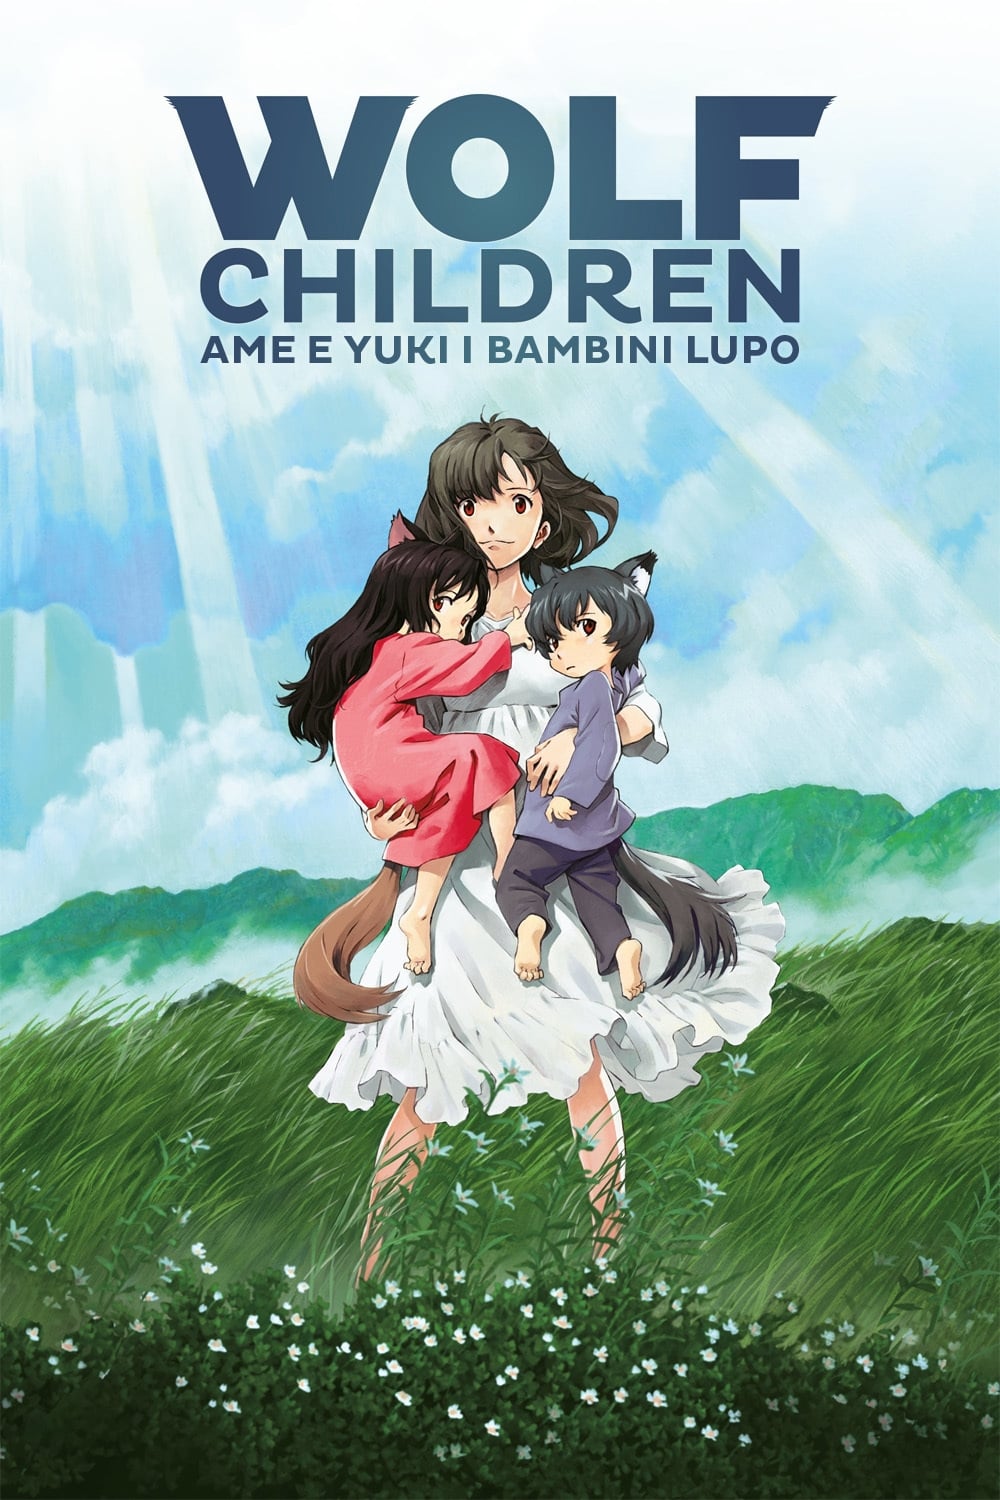 Wolf Children – Ame e Yuki i bambini lupo [HD] (2012)